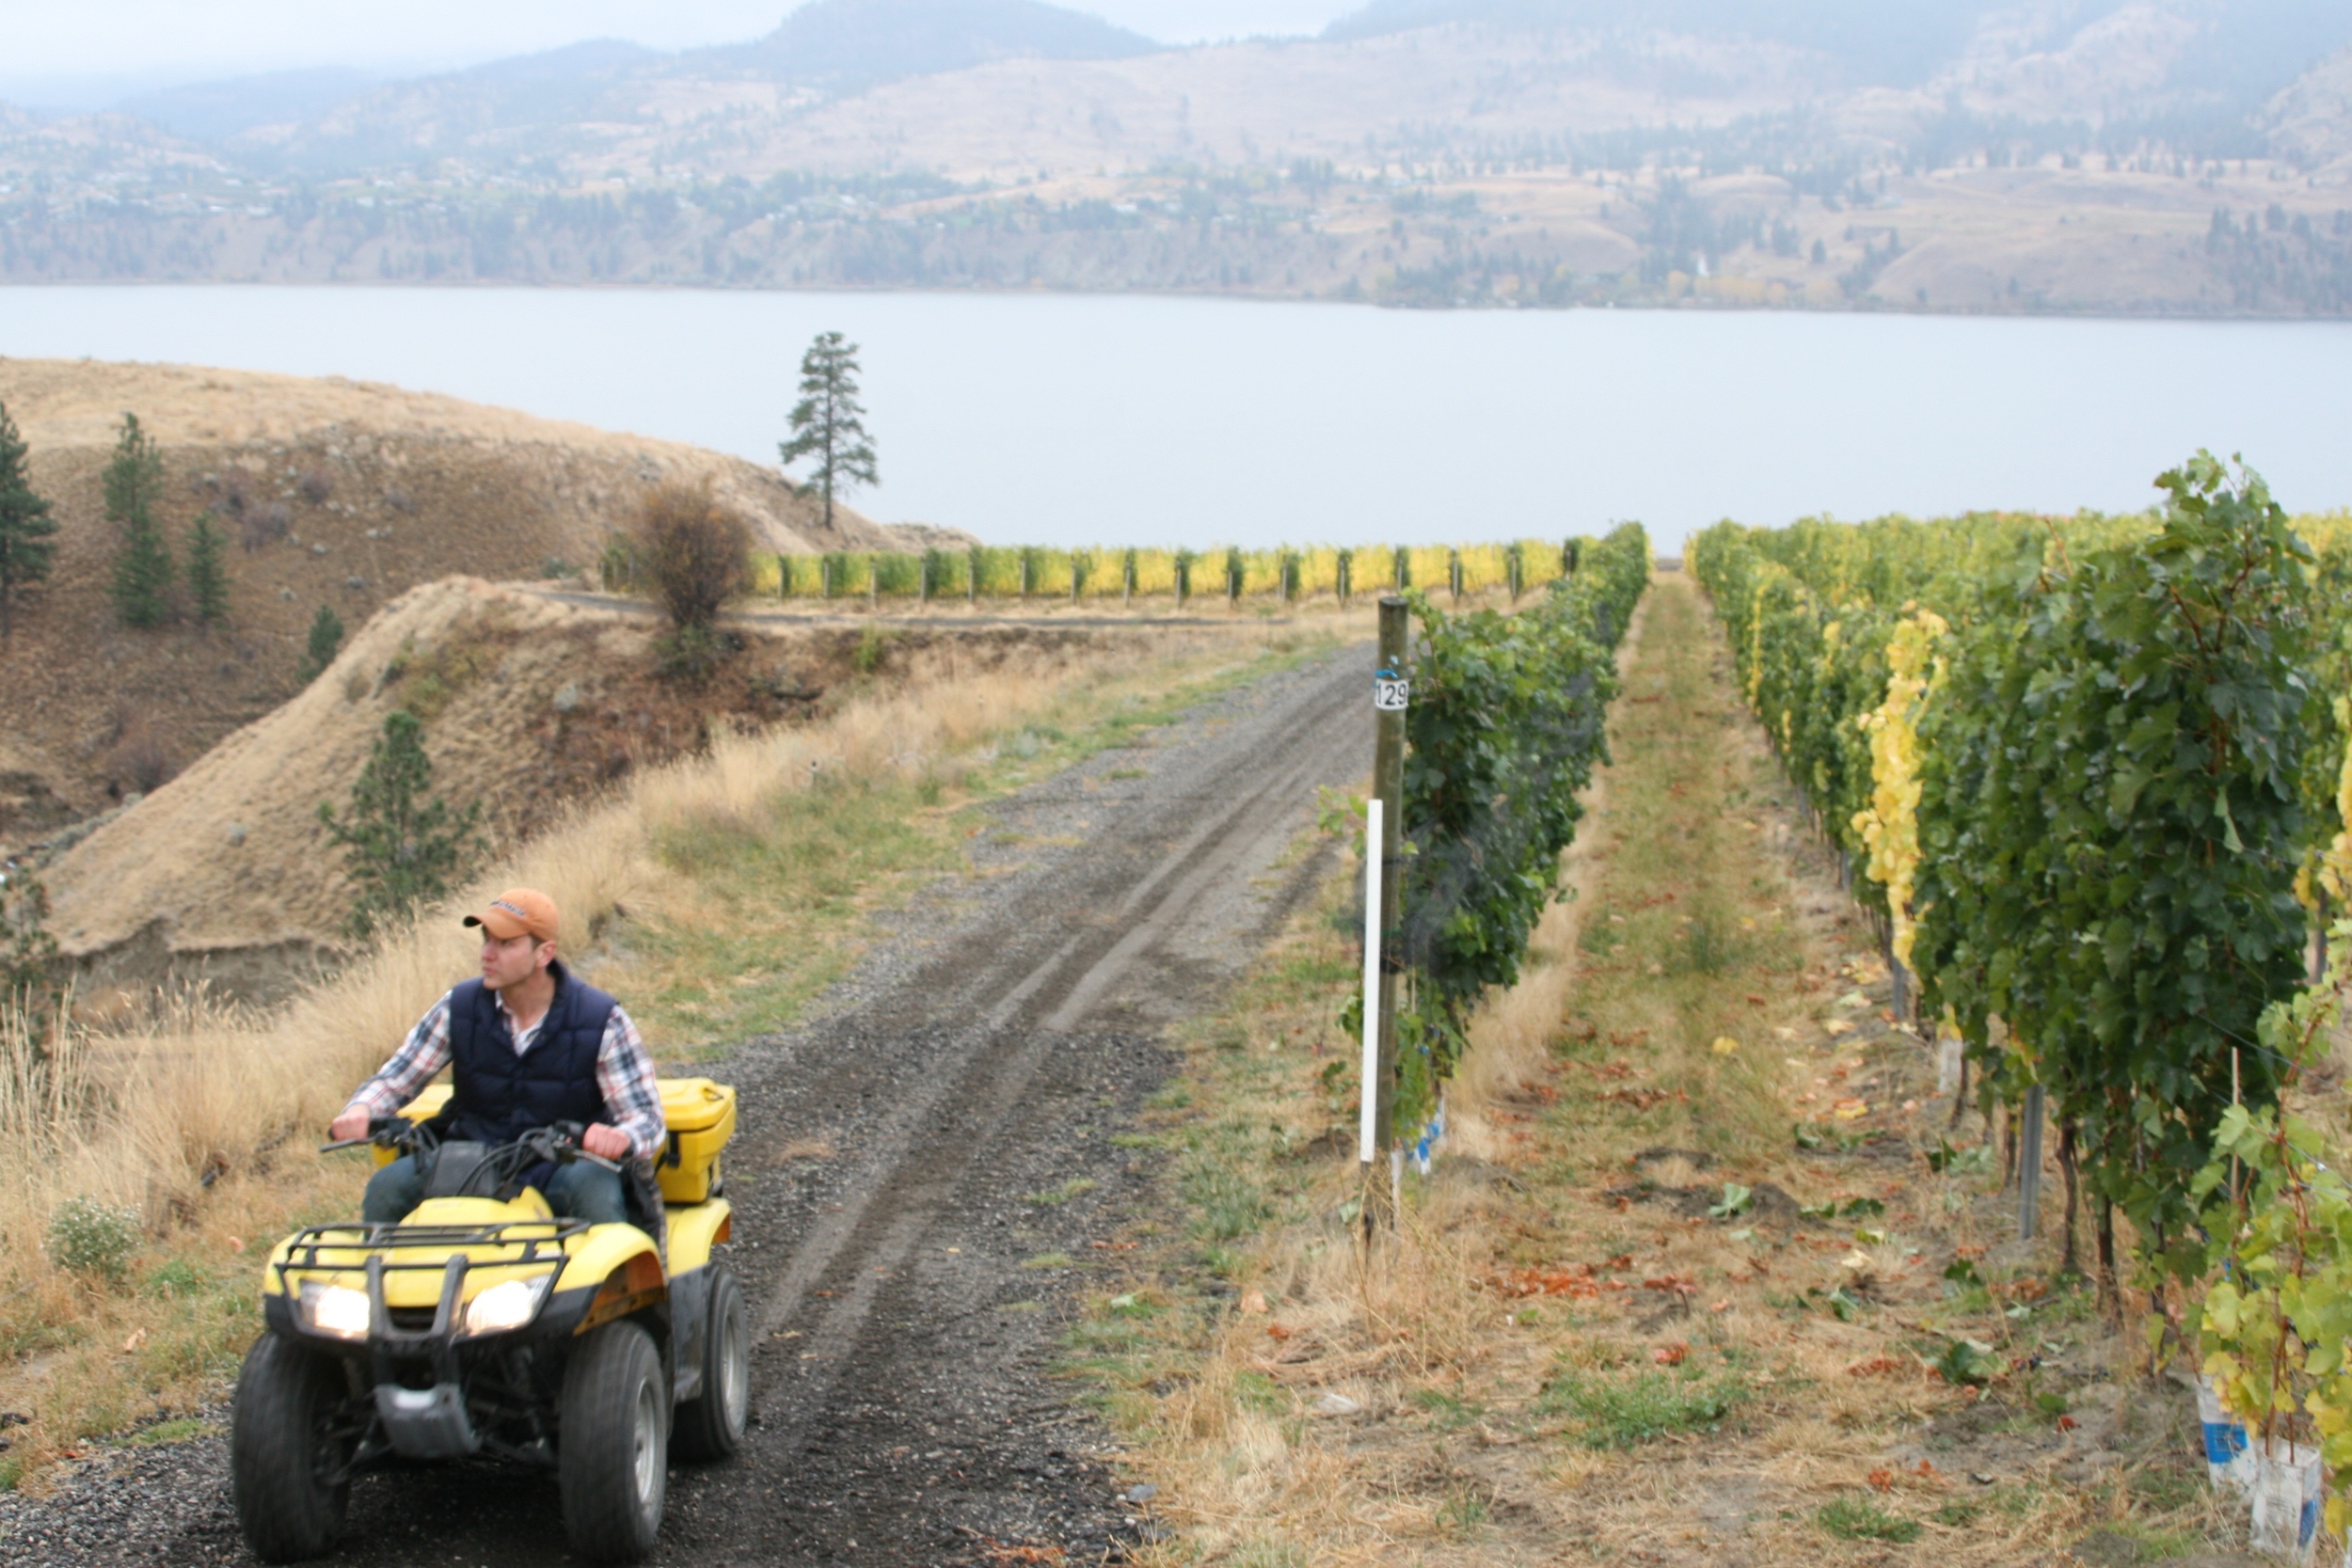  Touring the vineyard on an ATV 